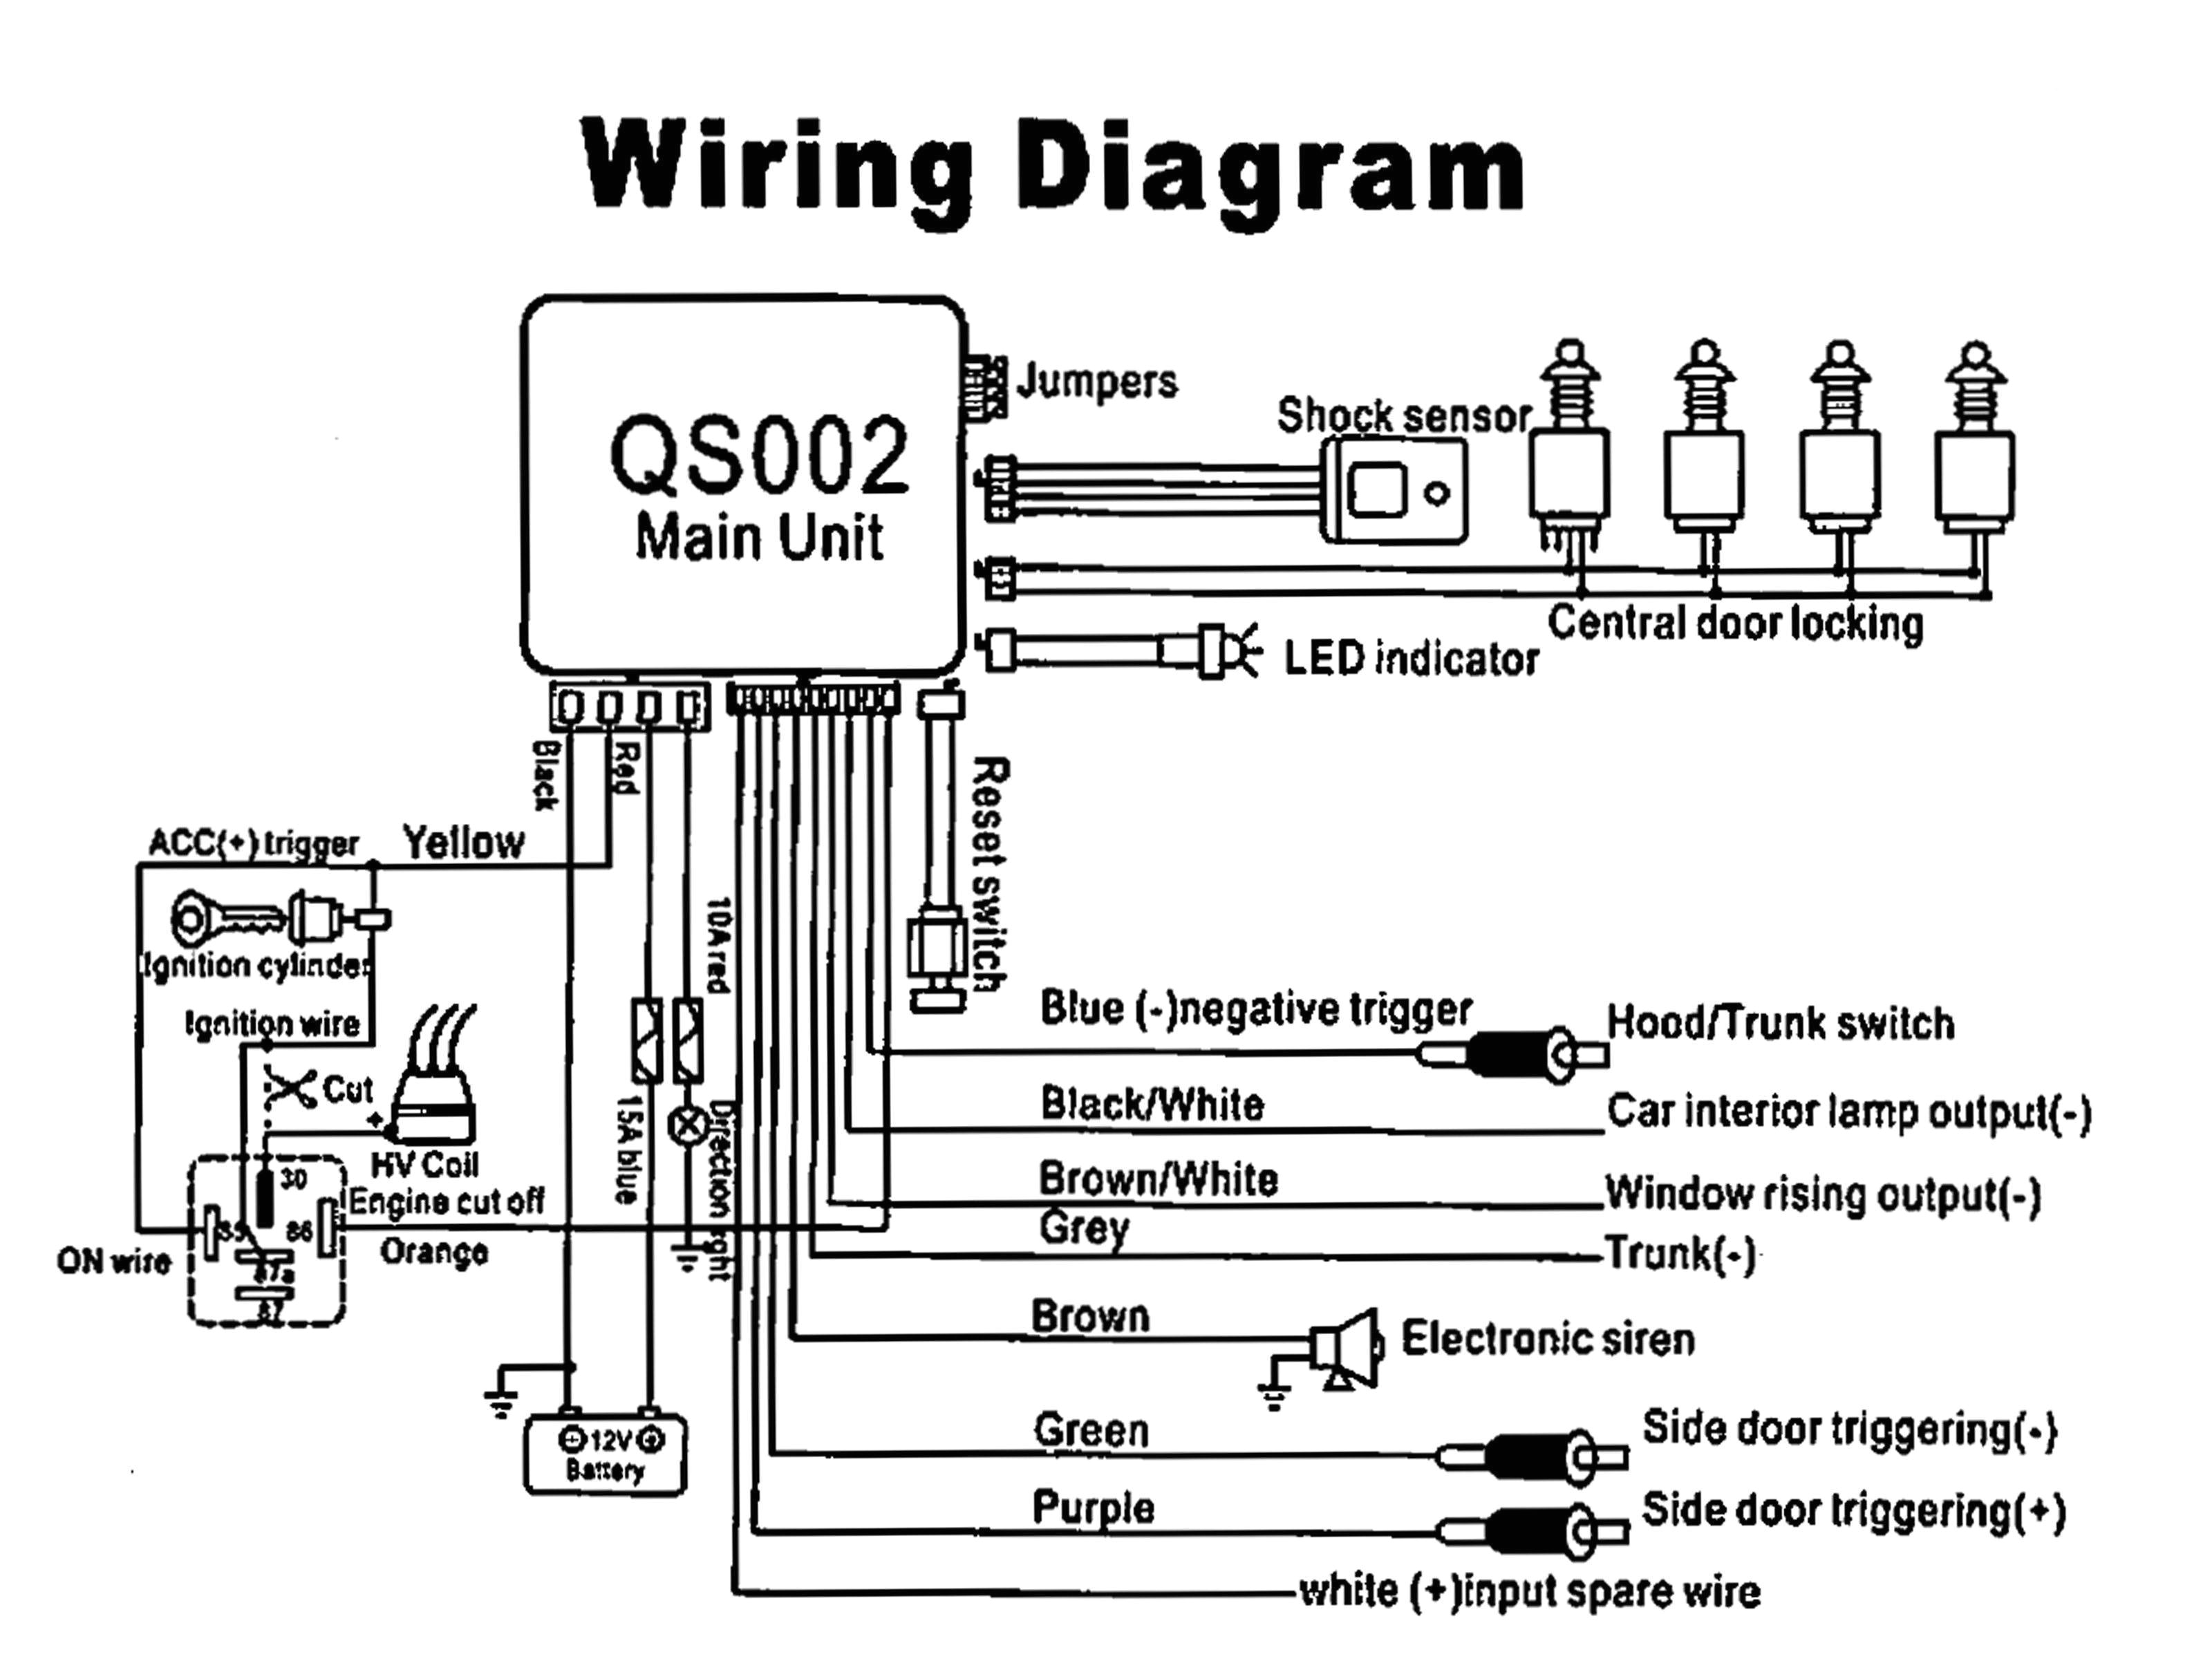 stinger car alarm wiring diagram wiring diagram showstinger car alarm wiring diagram wiring library hornet car